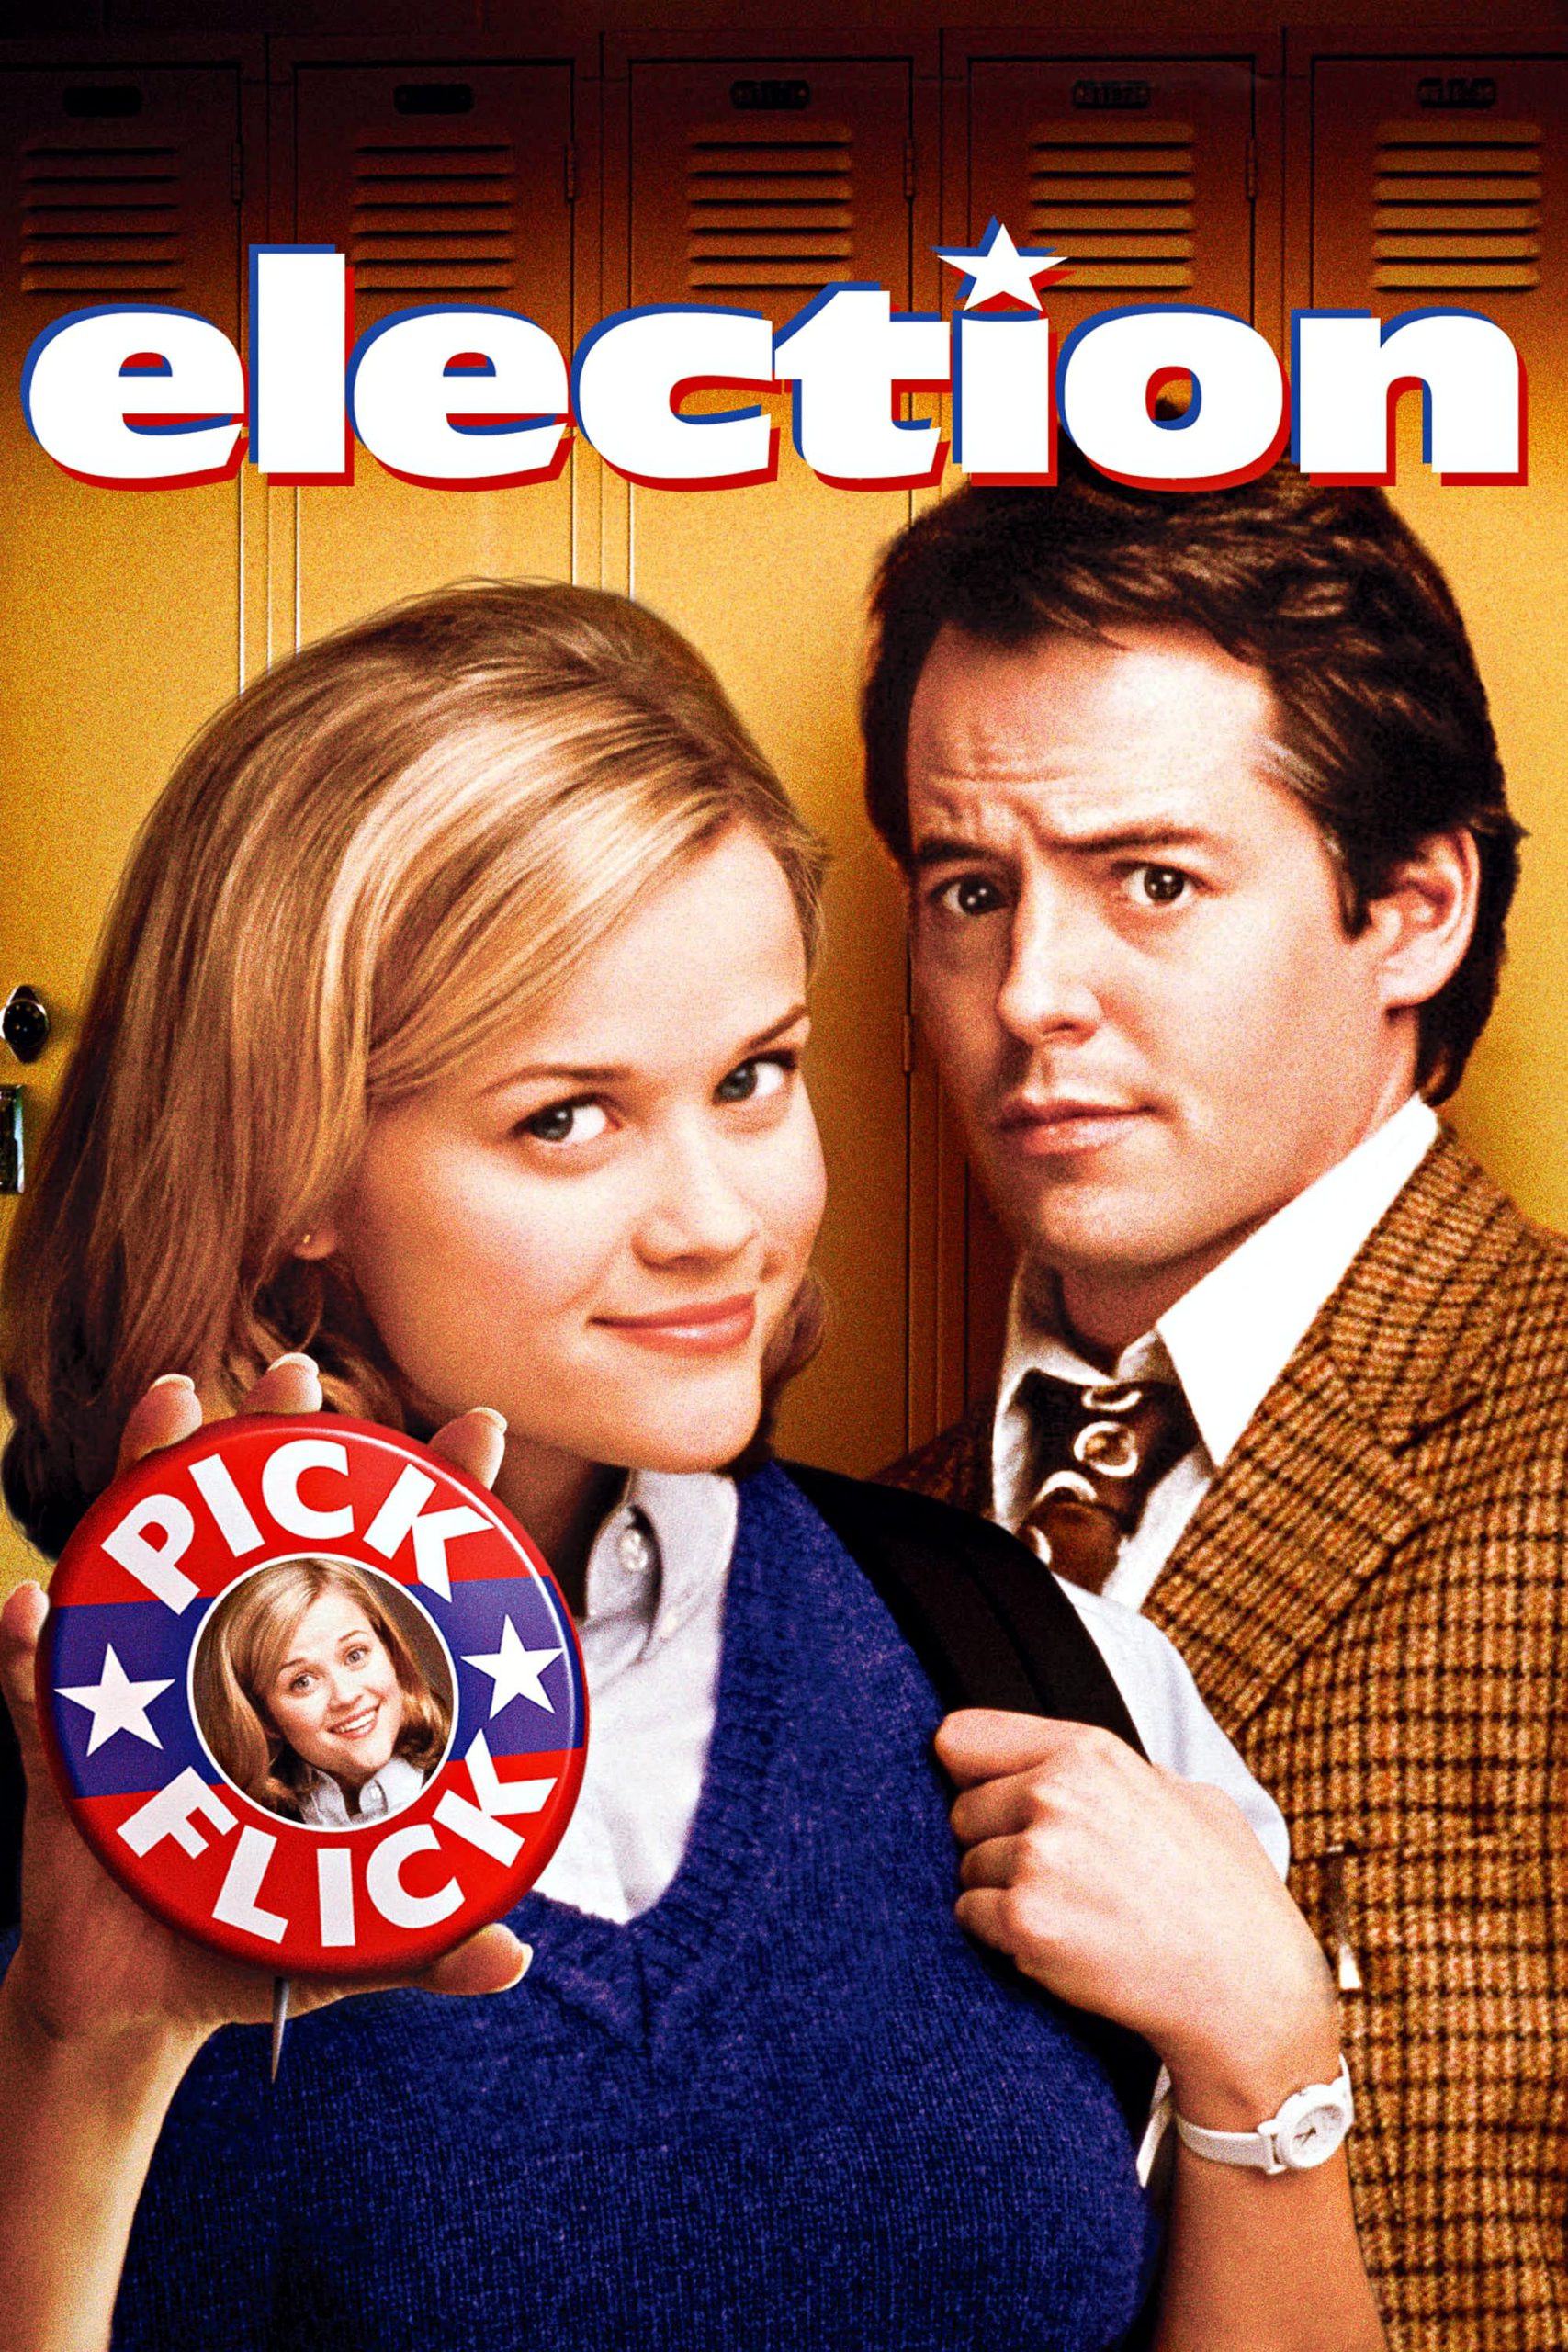 Election [HD] (1999)